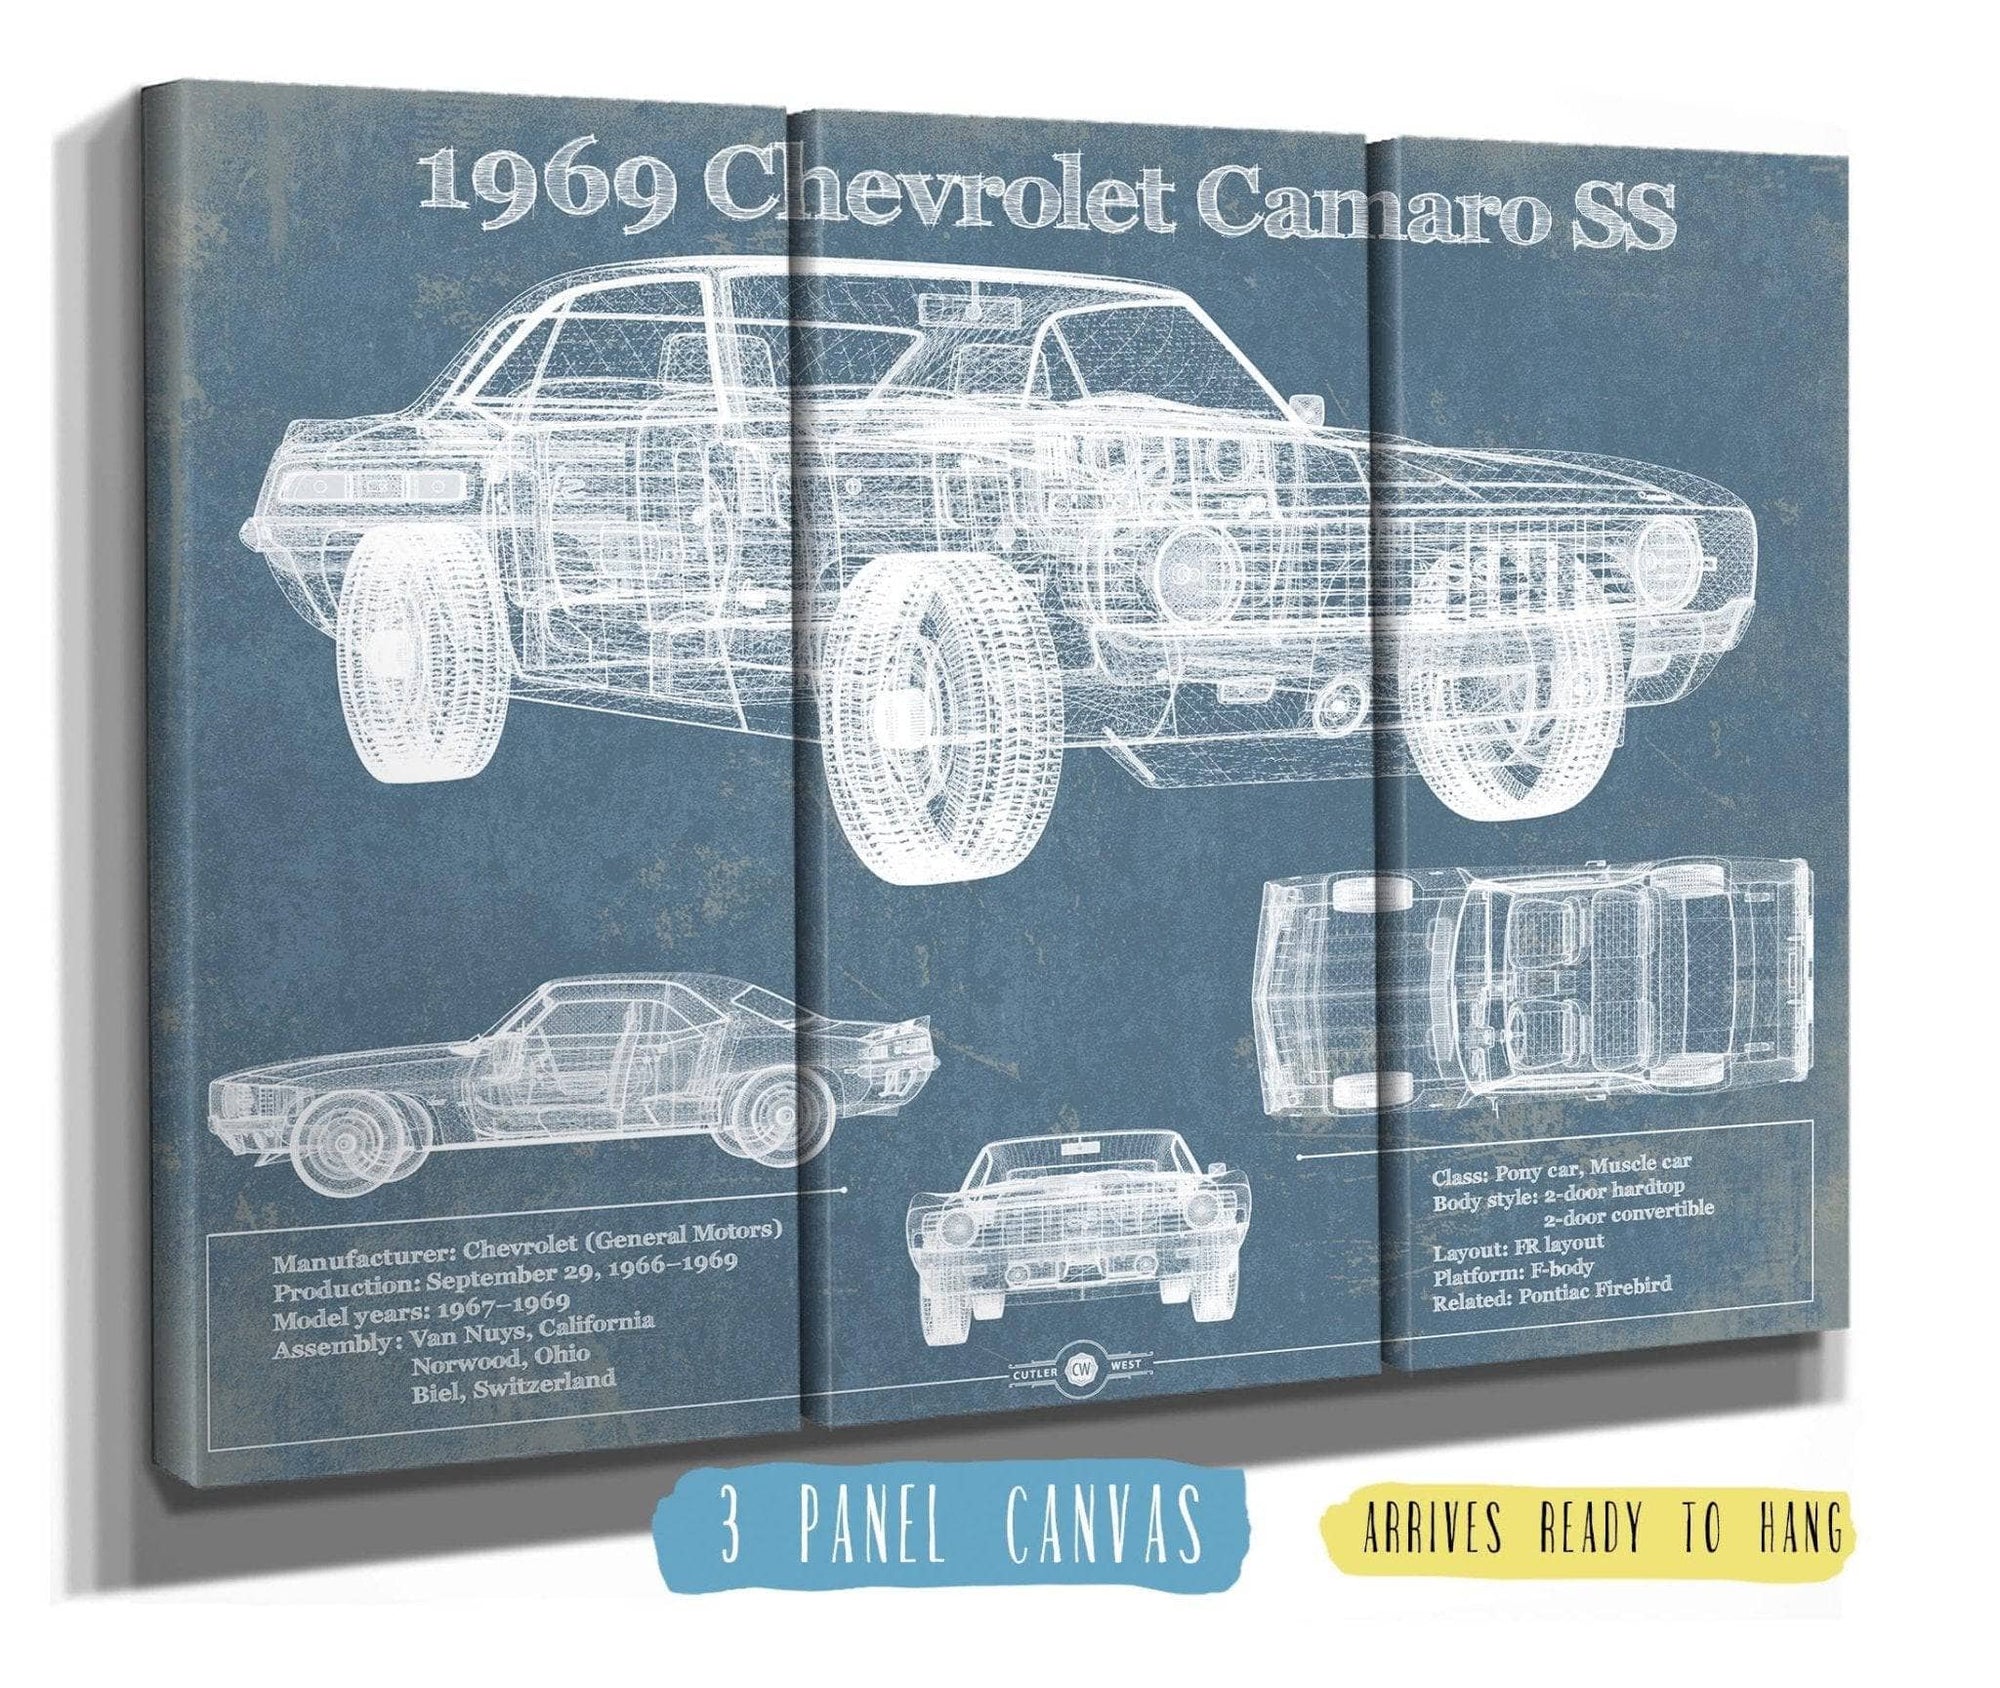 Cutler West Chevrolet Collection 1969 Chevrolet Camaro SS Original Vintage Car Print